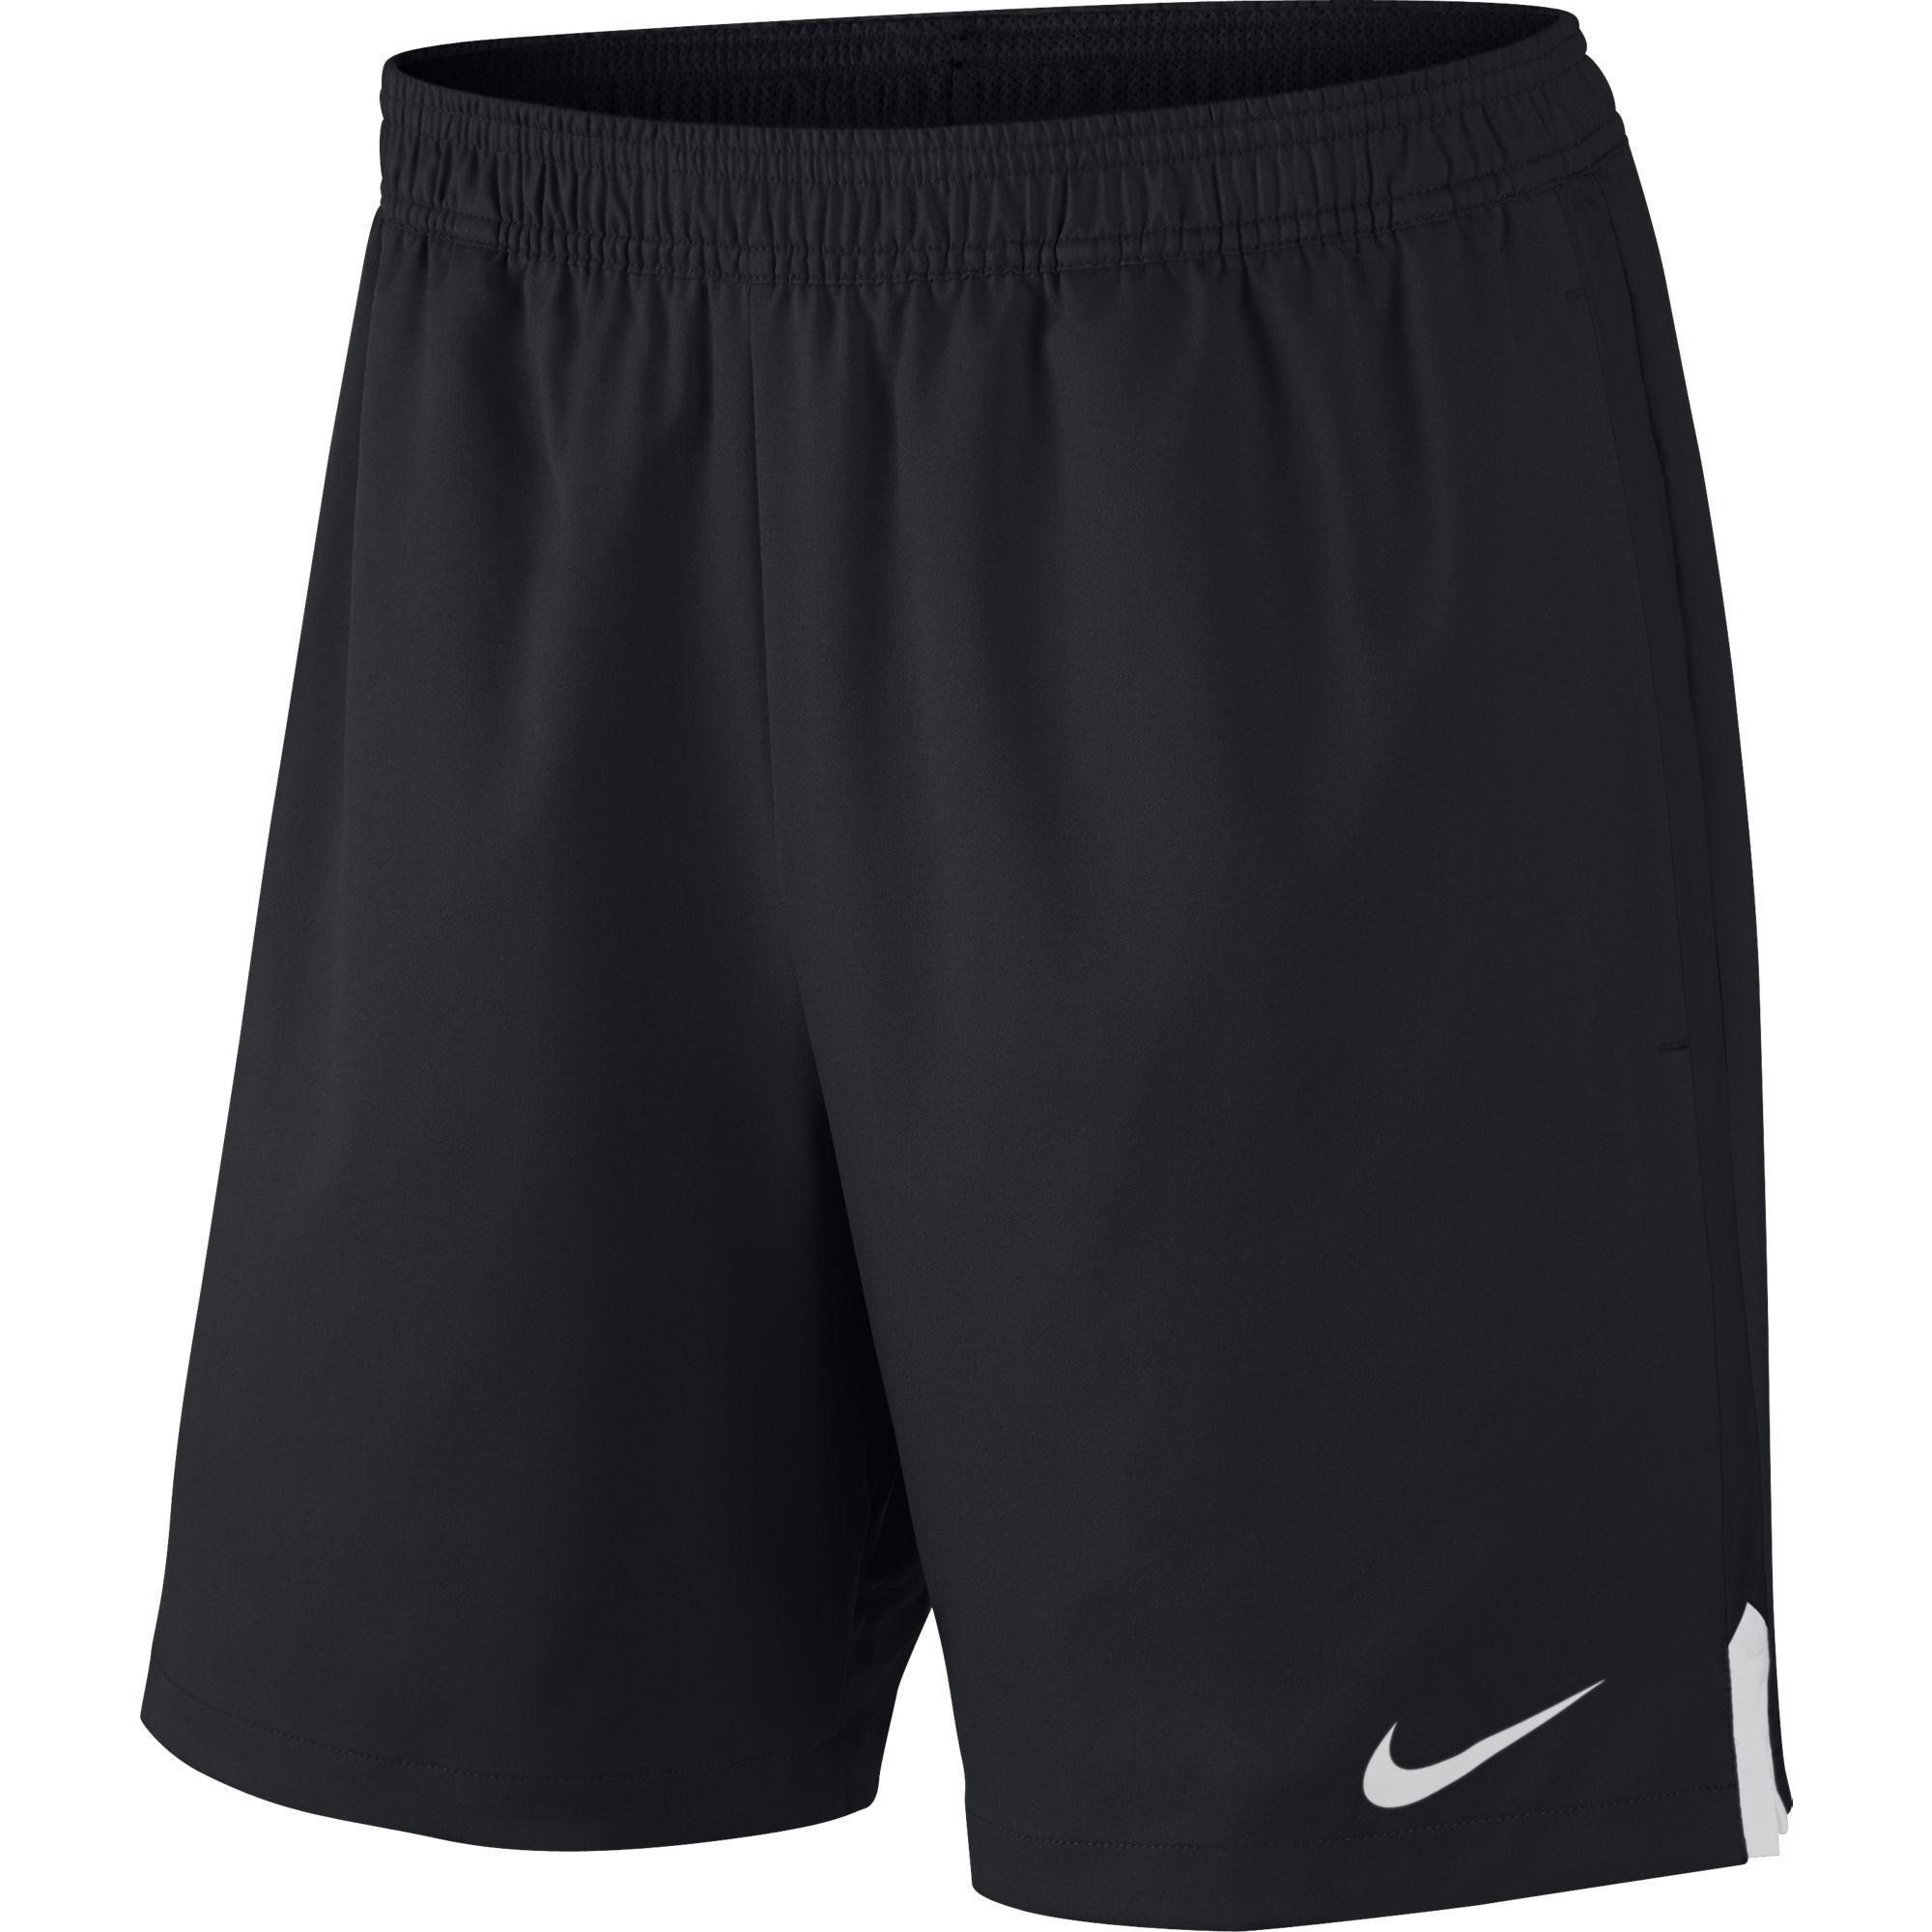 Nike Mens Court 7 Inch Tennis Shorts - Black - Tennisnuts.com